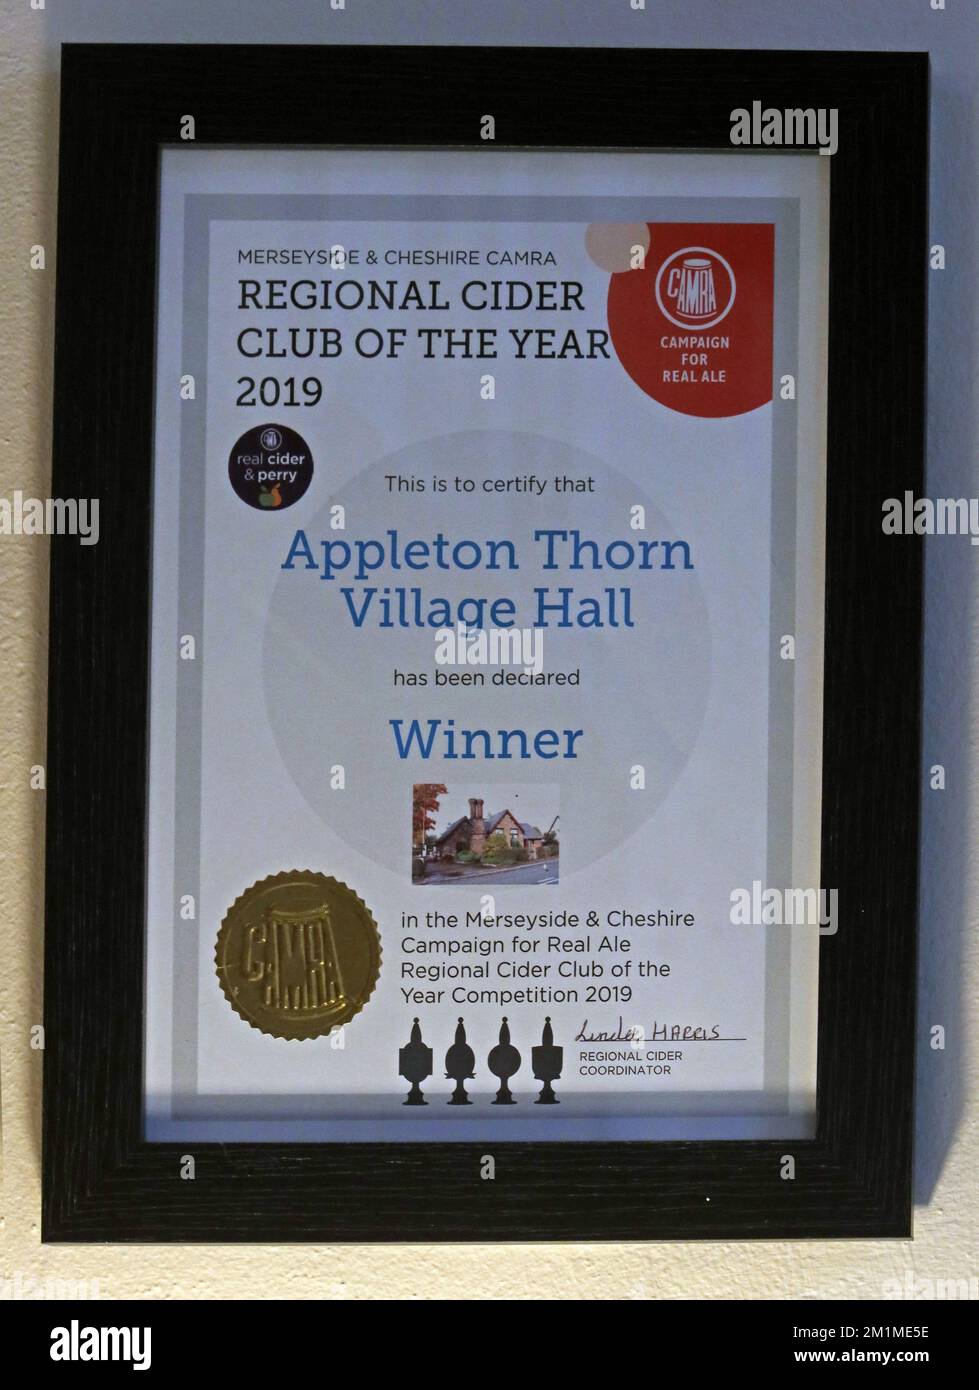 Merseyside & Cheshire CAMRA,Regional Cider Club of the year 2019,Appleton Thorn Village Hall,Winner framed certificate Stock Photo